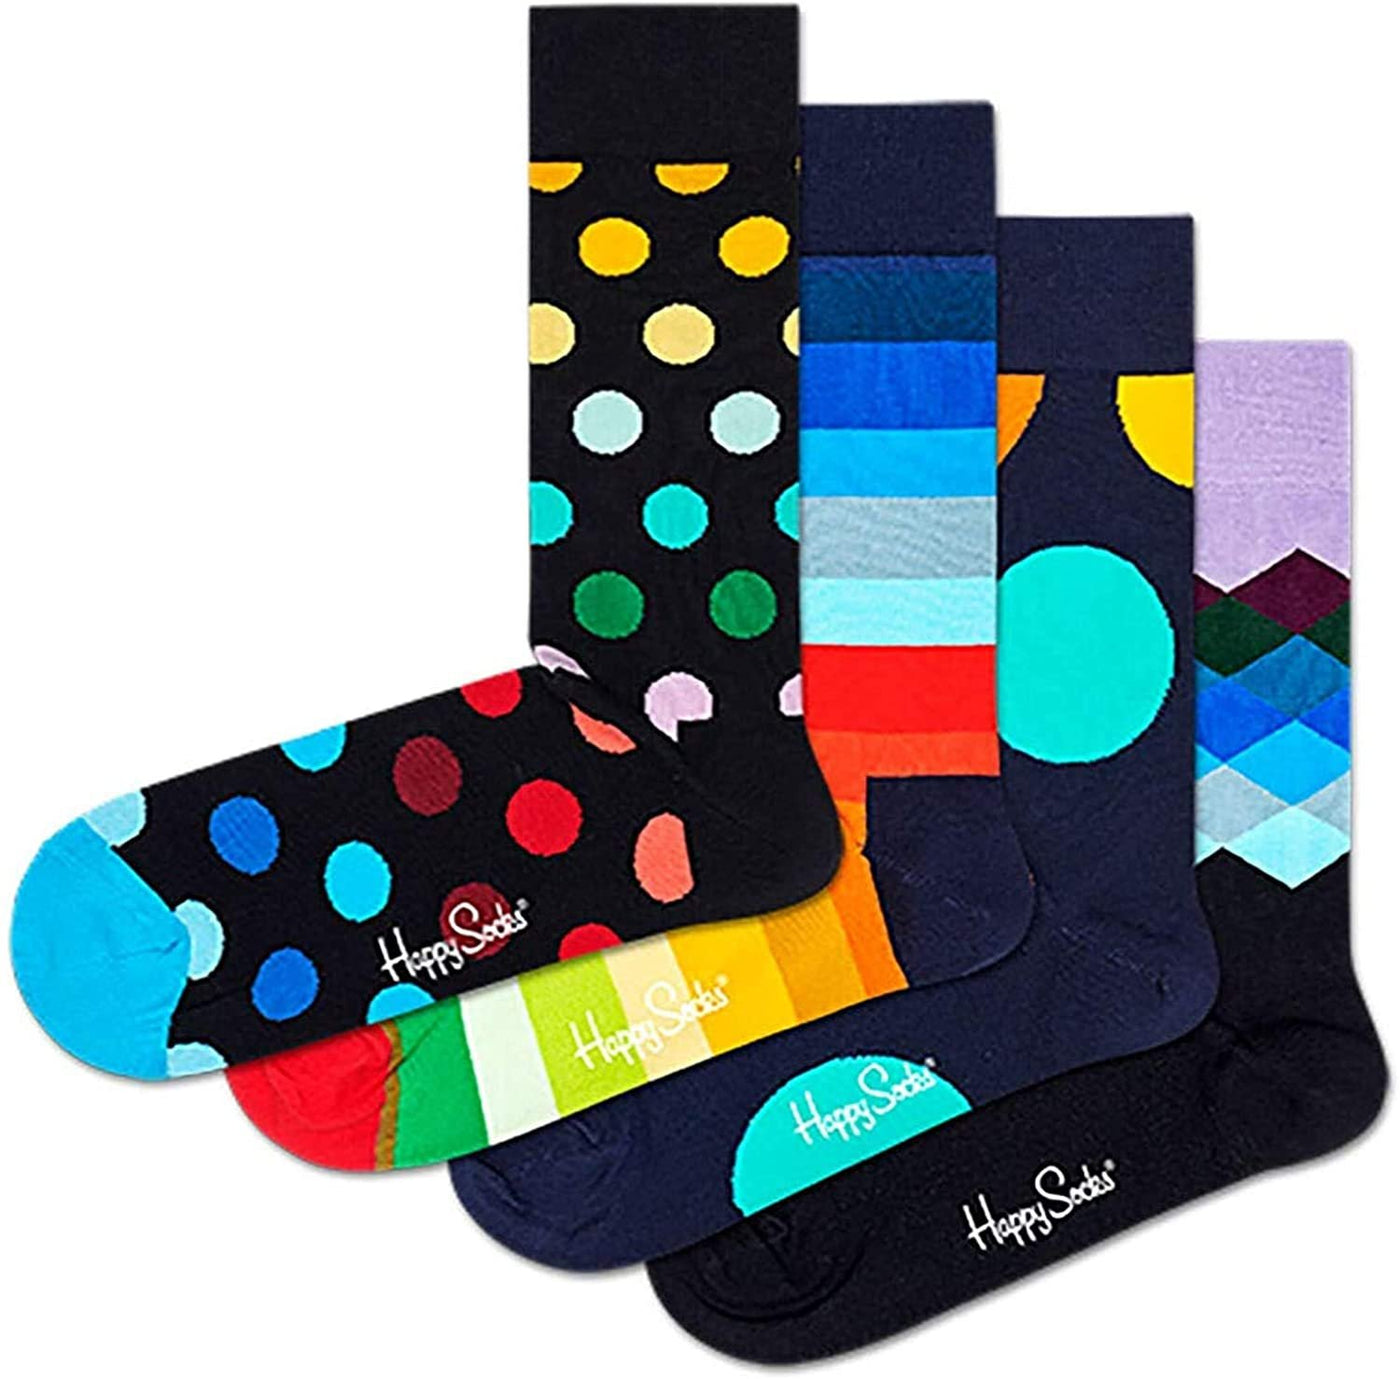 Classic Multicolor Socks 4-Pack Gift Box